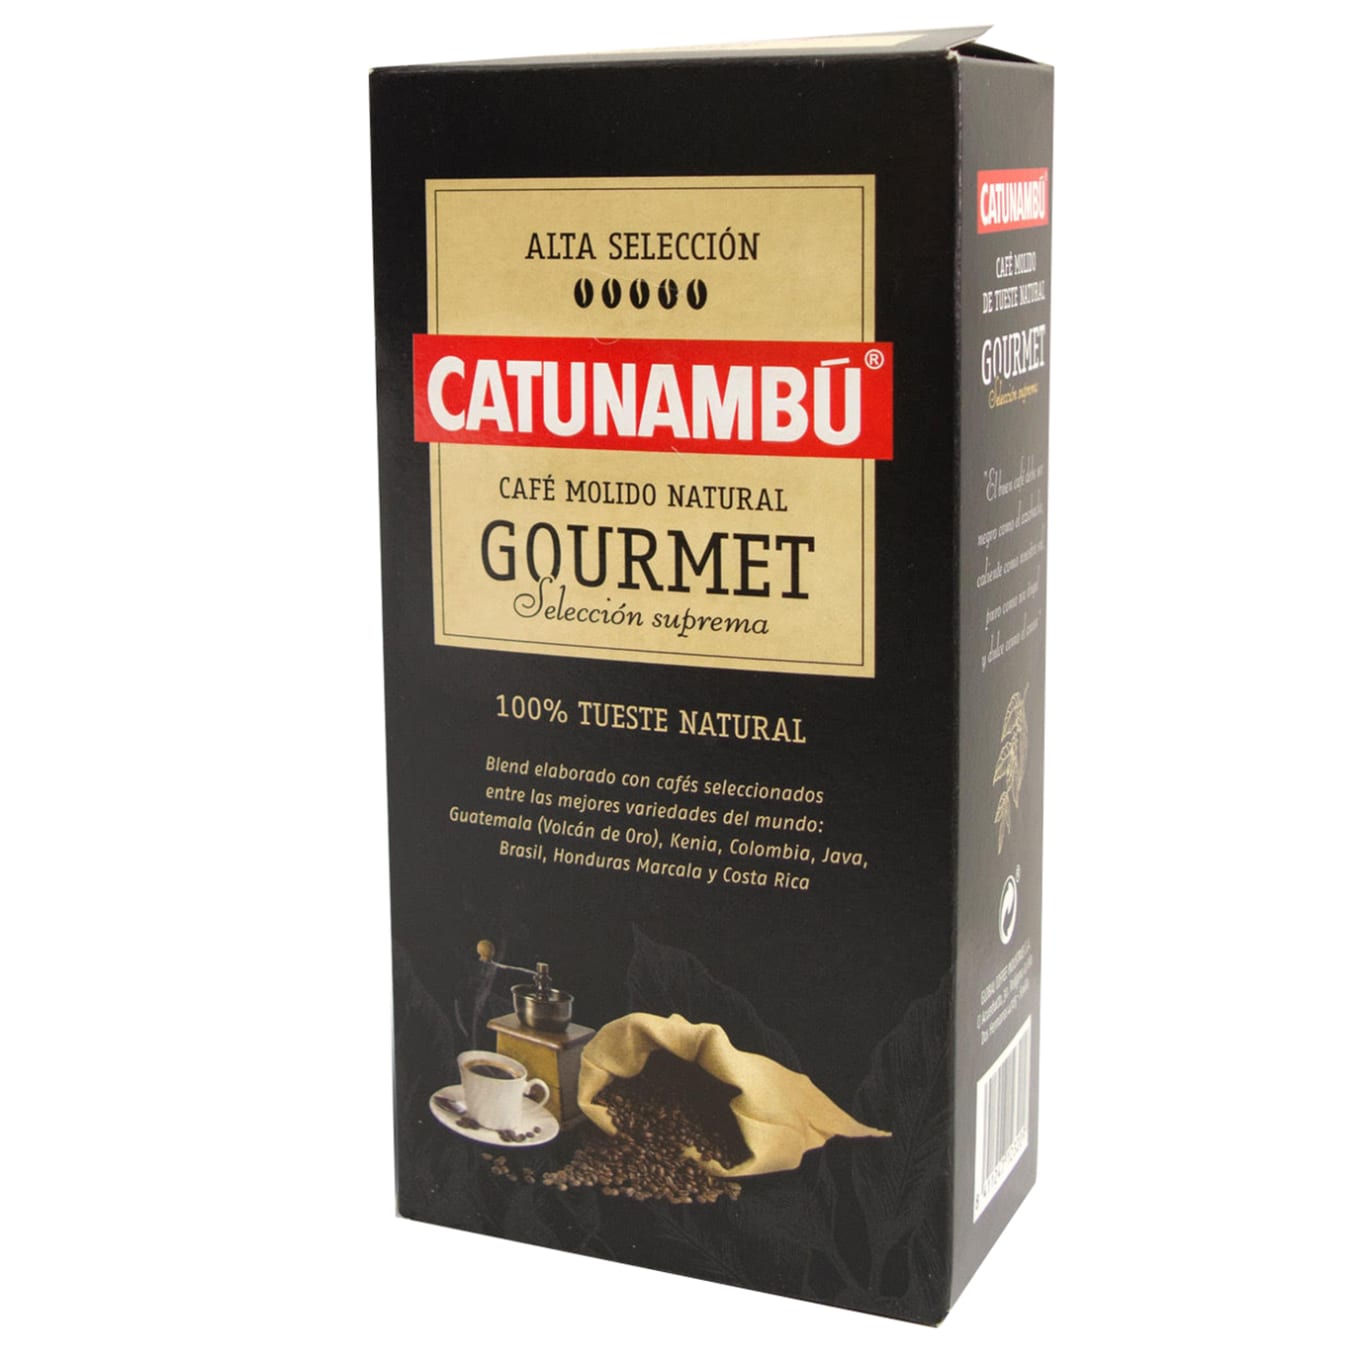 Cafe grano mezcla suave catunambu 1 kg